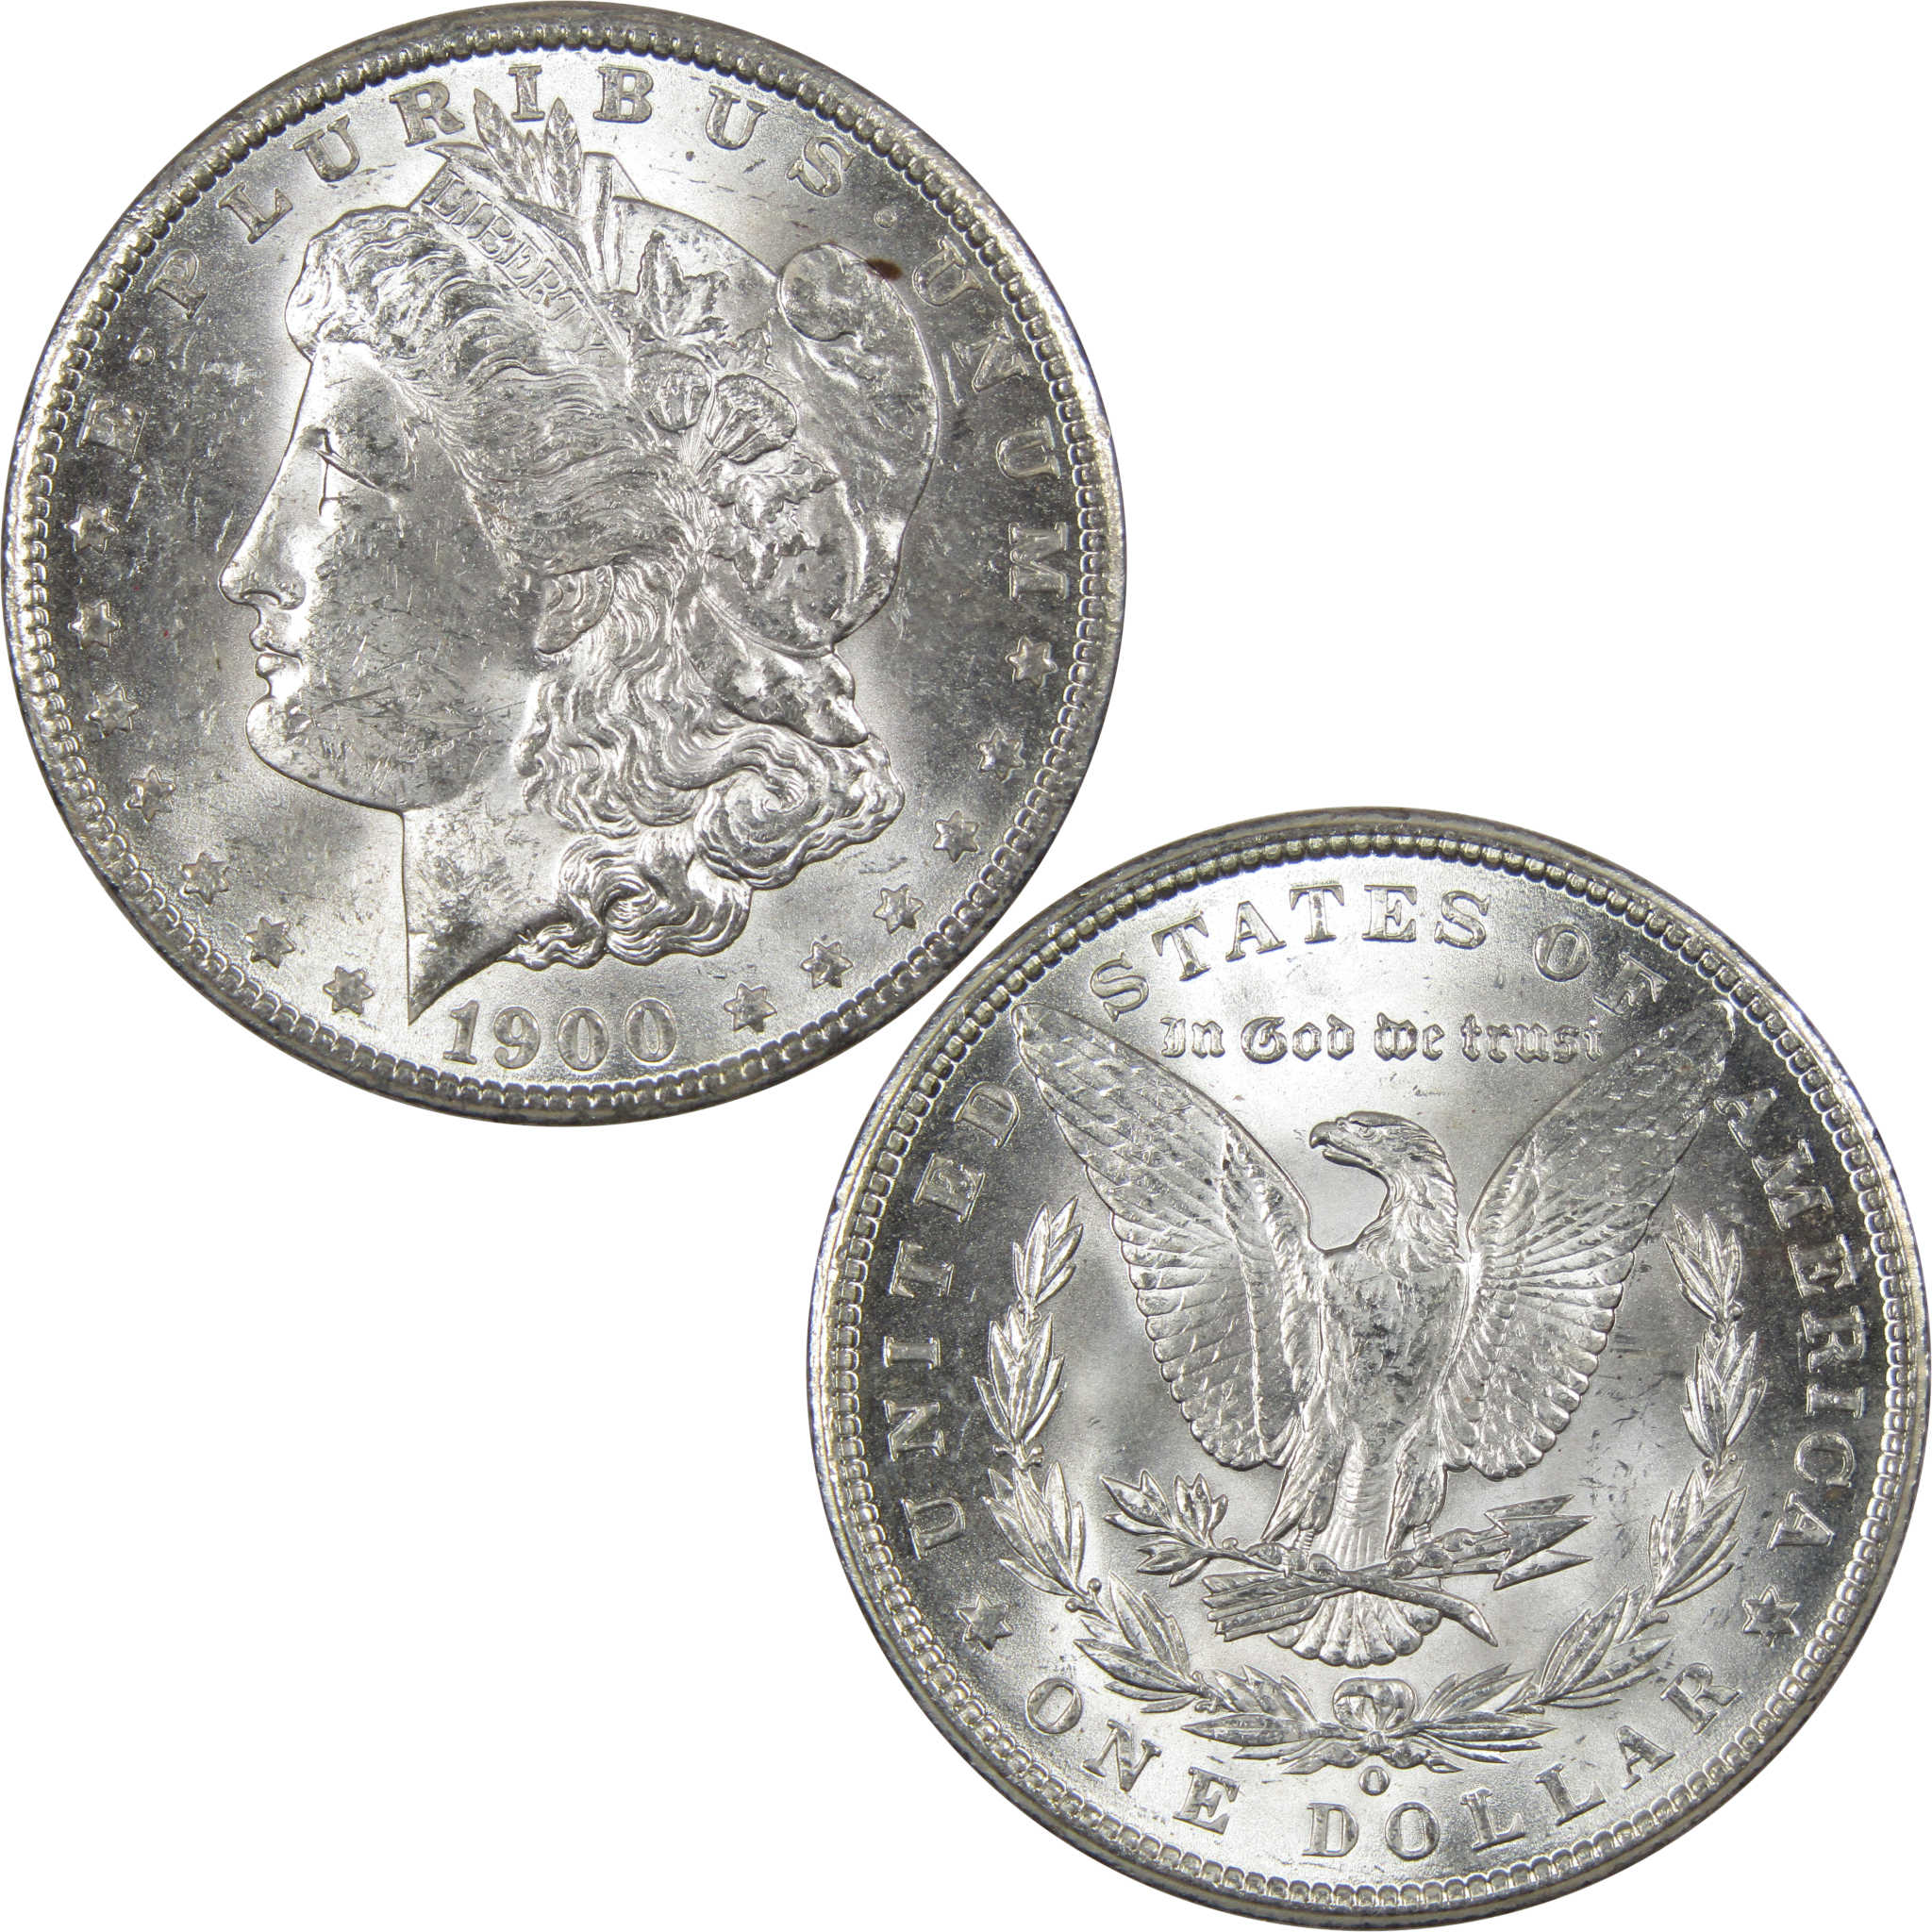 1900 O Morgan Dollar BU Uncirculated Mint State 90% Silver SKU:IPC9772 - Morgan coin - Morgan silver dollar - Morgan silver dollar for sale - Profile Coins &amp; Collectibles